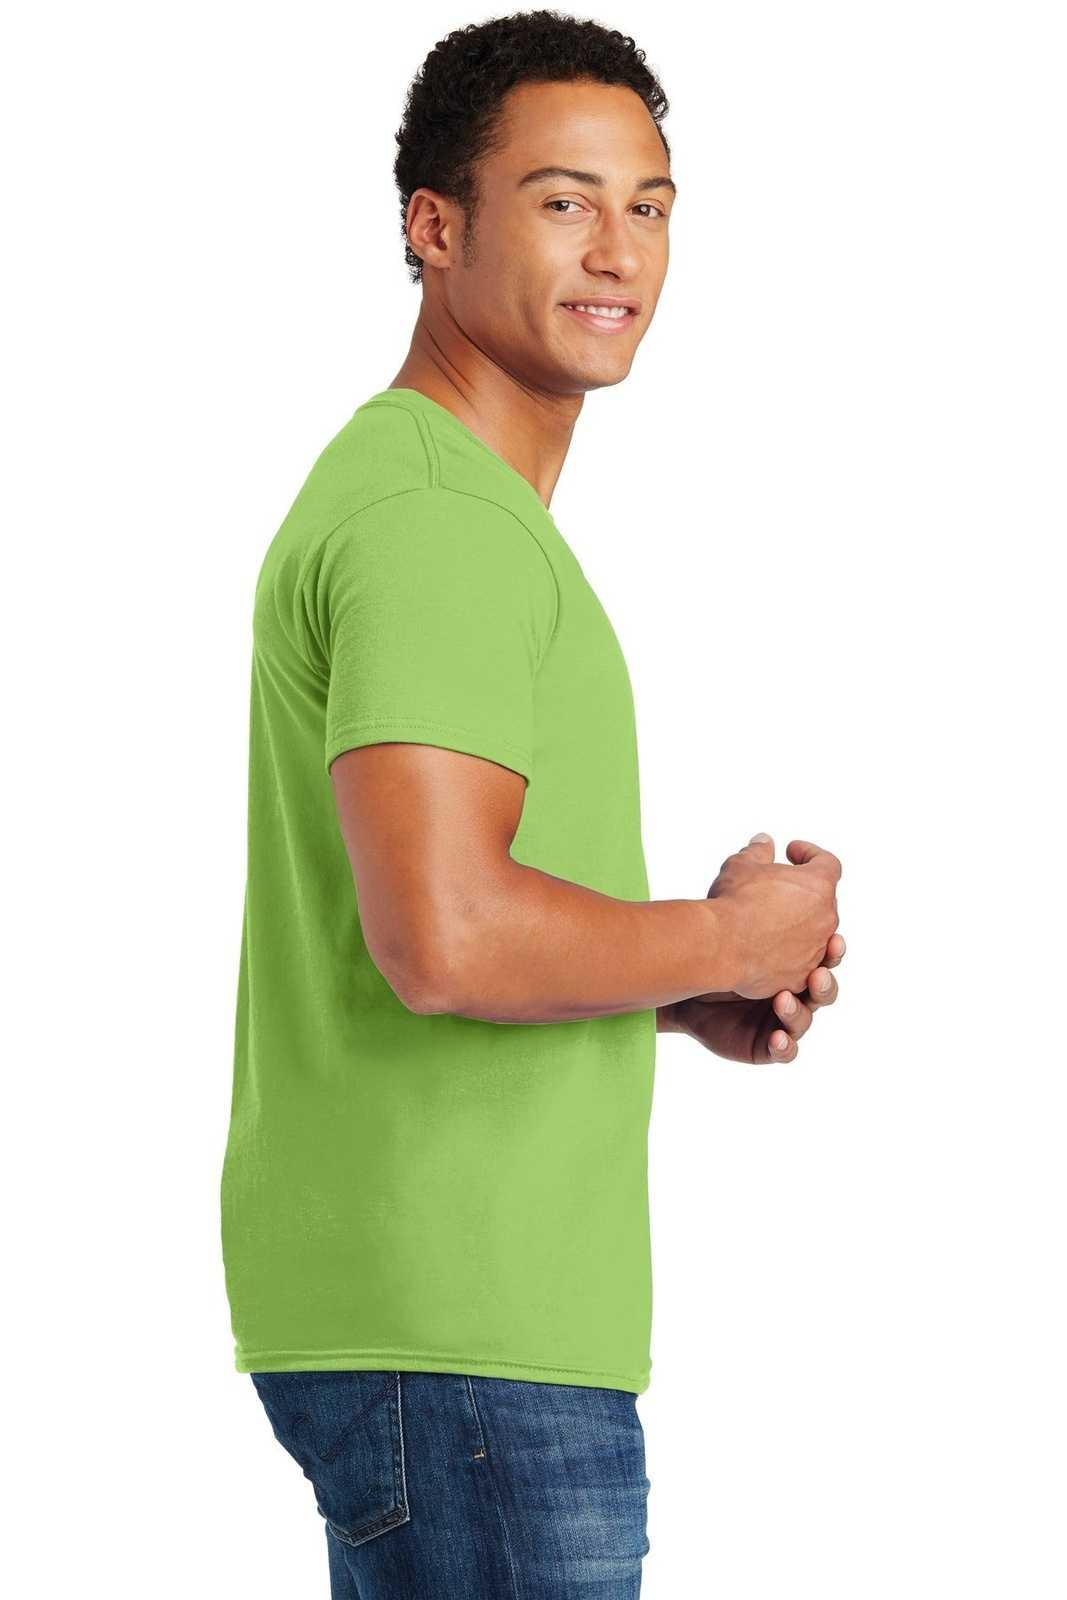 Hanes 4980 Nano-T Cotton T-Shirt - Lime - HIT a Double